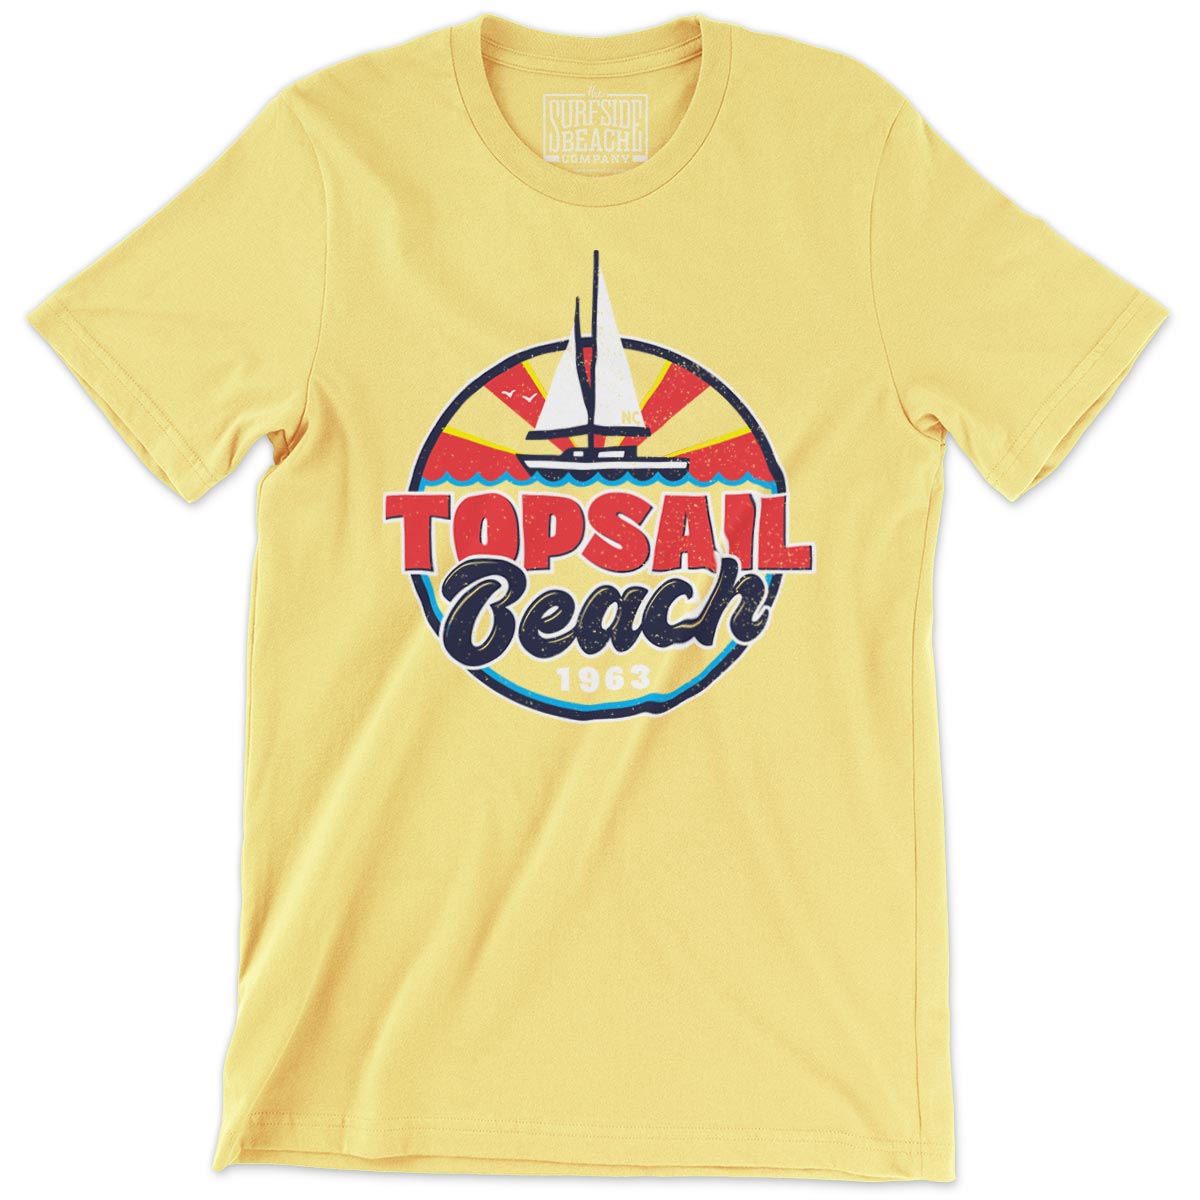 Topsail Beach (1963) Unisex T-shirt